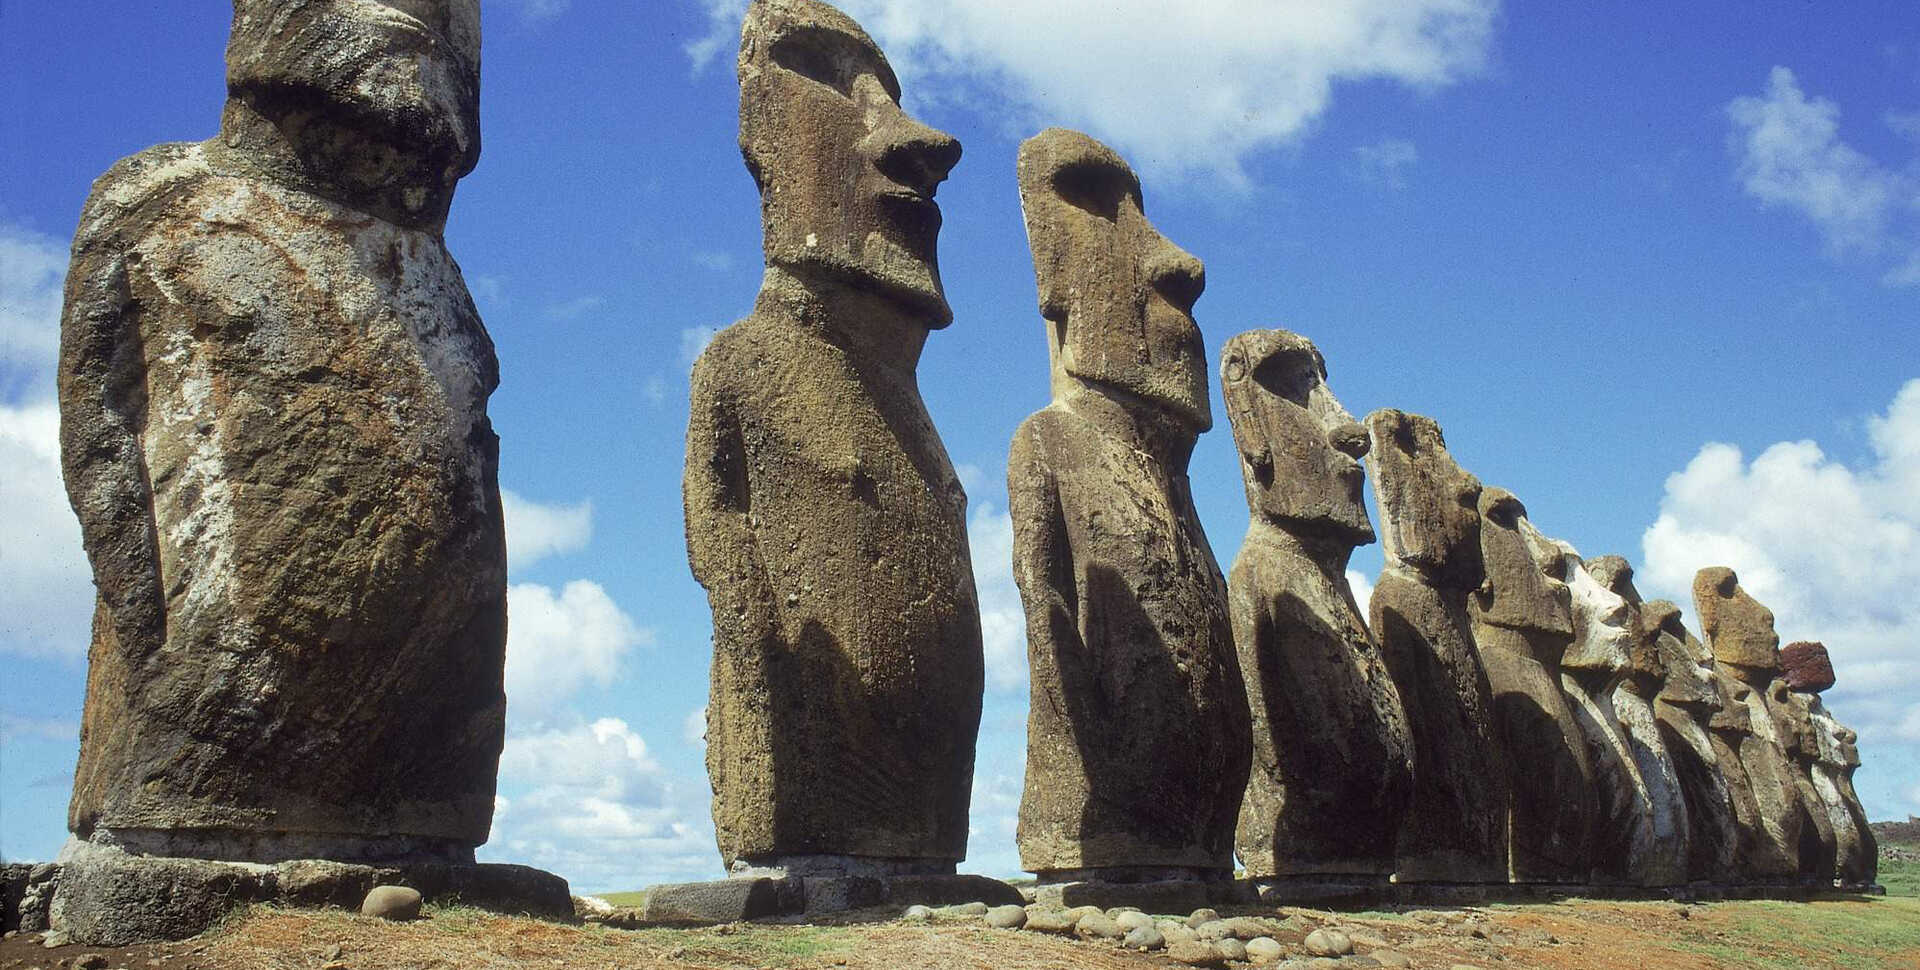 A dramatic row of moai sculptures on Easter Island (Rapa Nui)